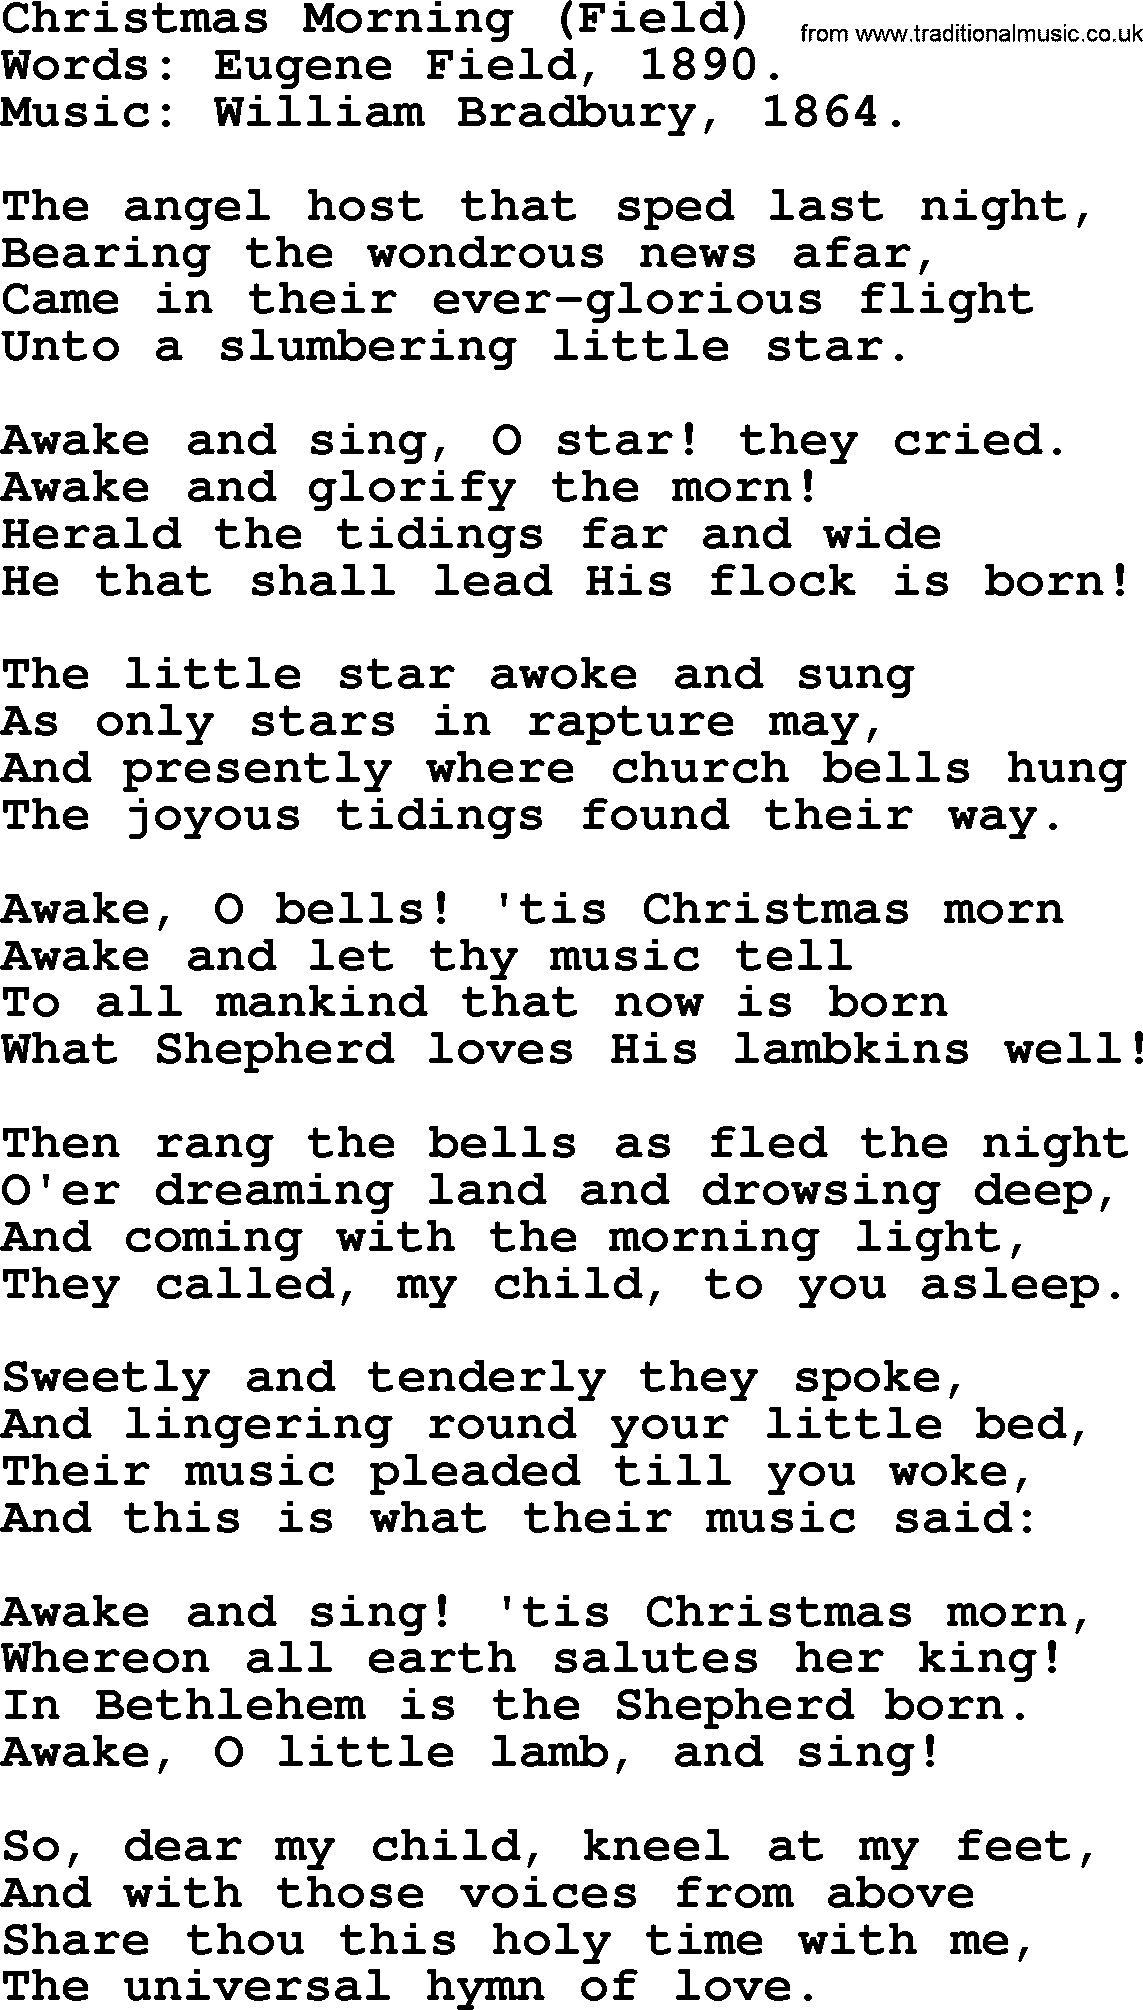 Christmas Hymns, Carols and Songs, title: Christmas Morning (field), lyrics with PDF